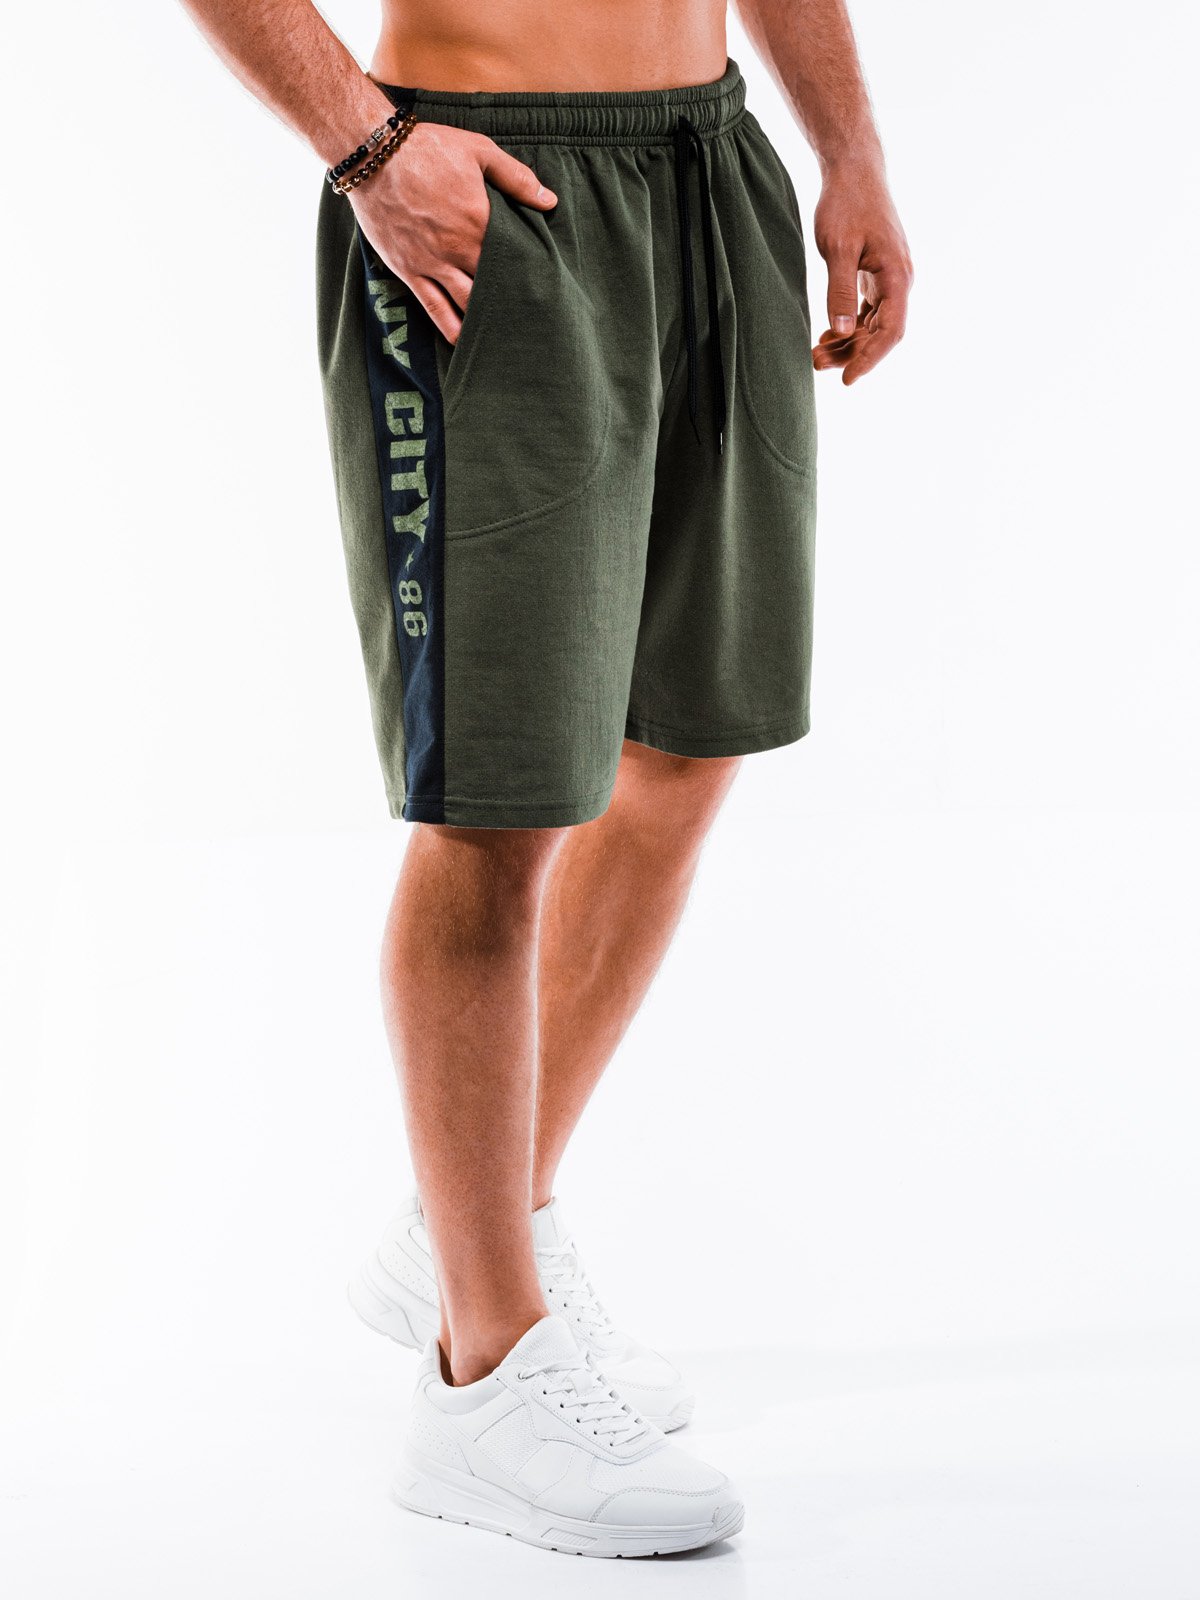 Men's short sweatpants W287 - khaki  MODONE wholesale - Clothing For Men